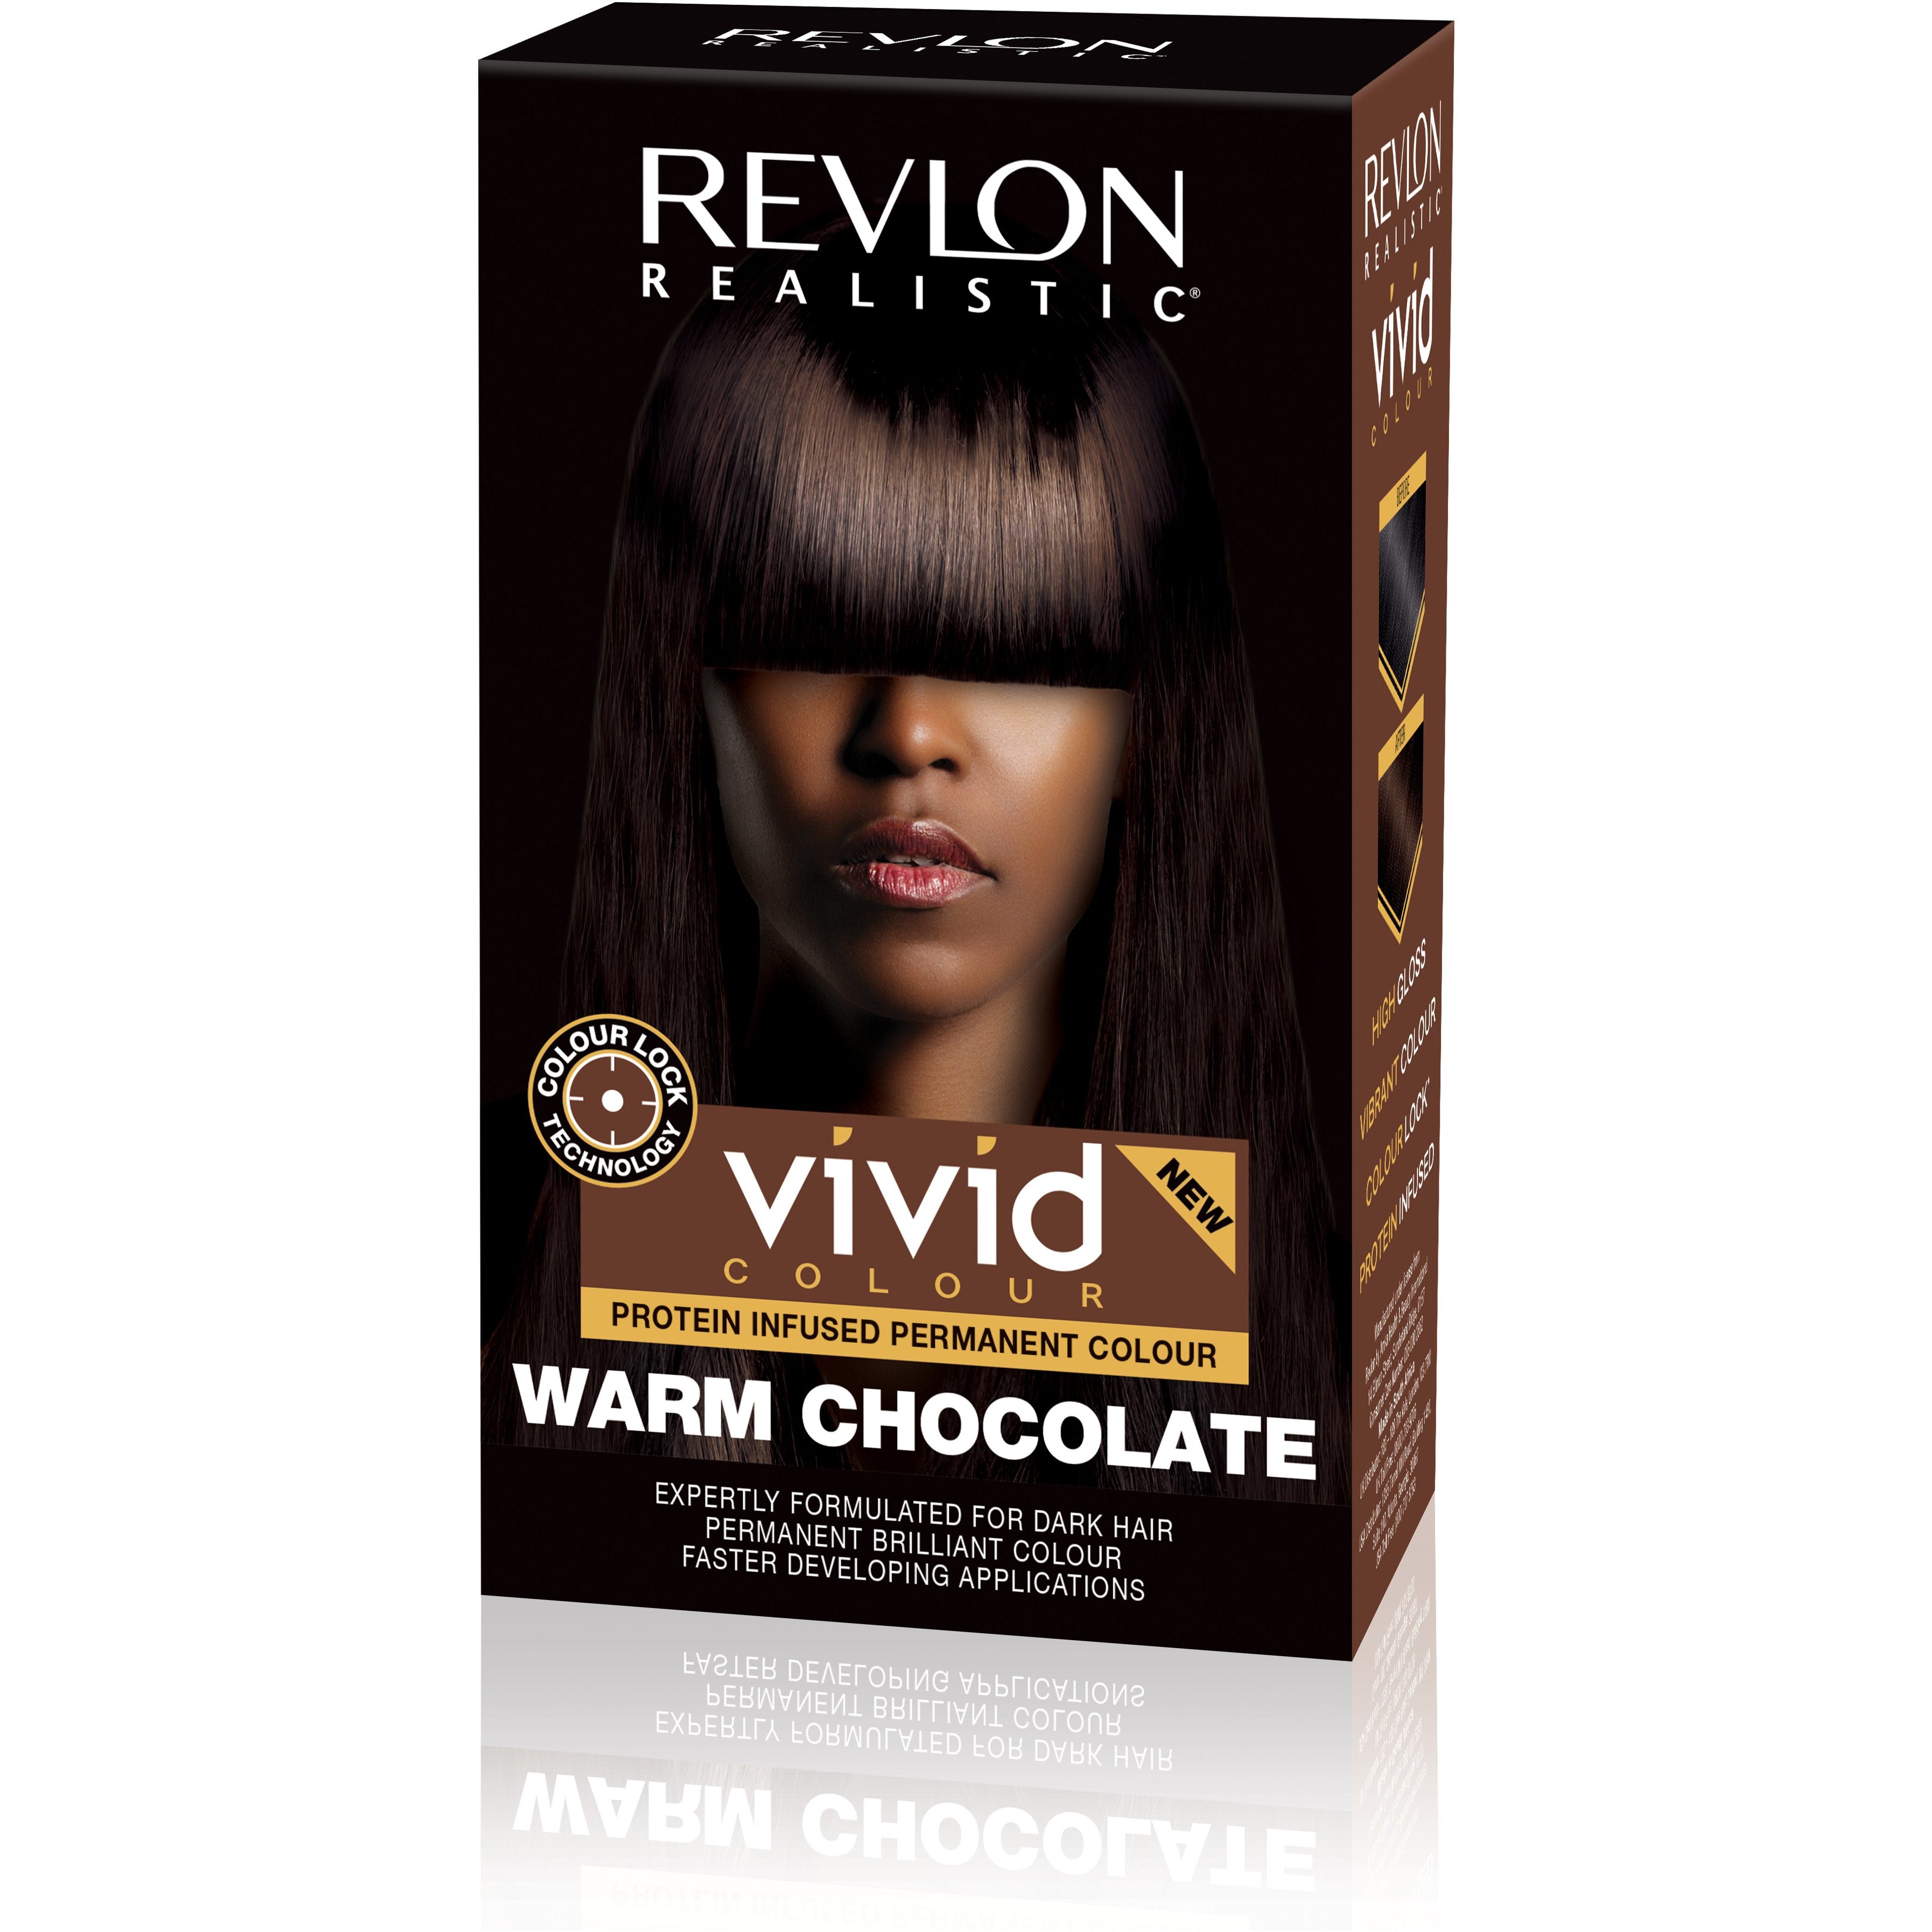 Revlon Realistic Vivid Colour Protein Infused Permanent Color Hair Warm Chocolate 3.7 Oz